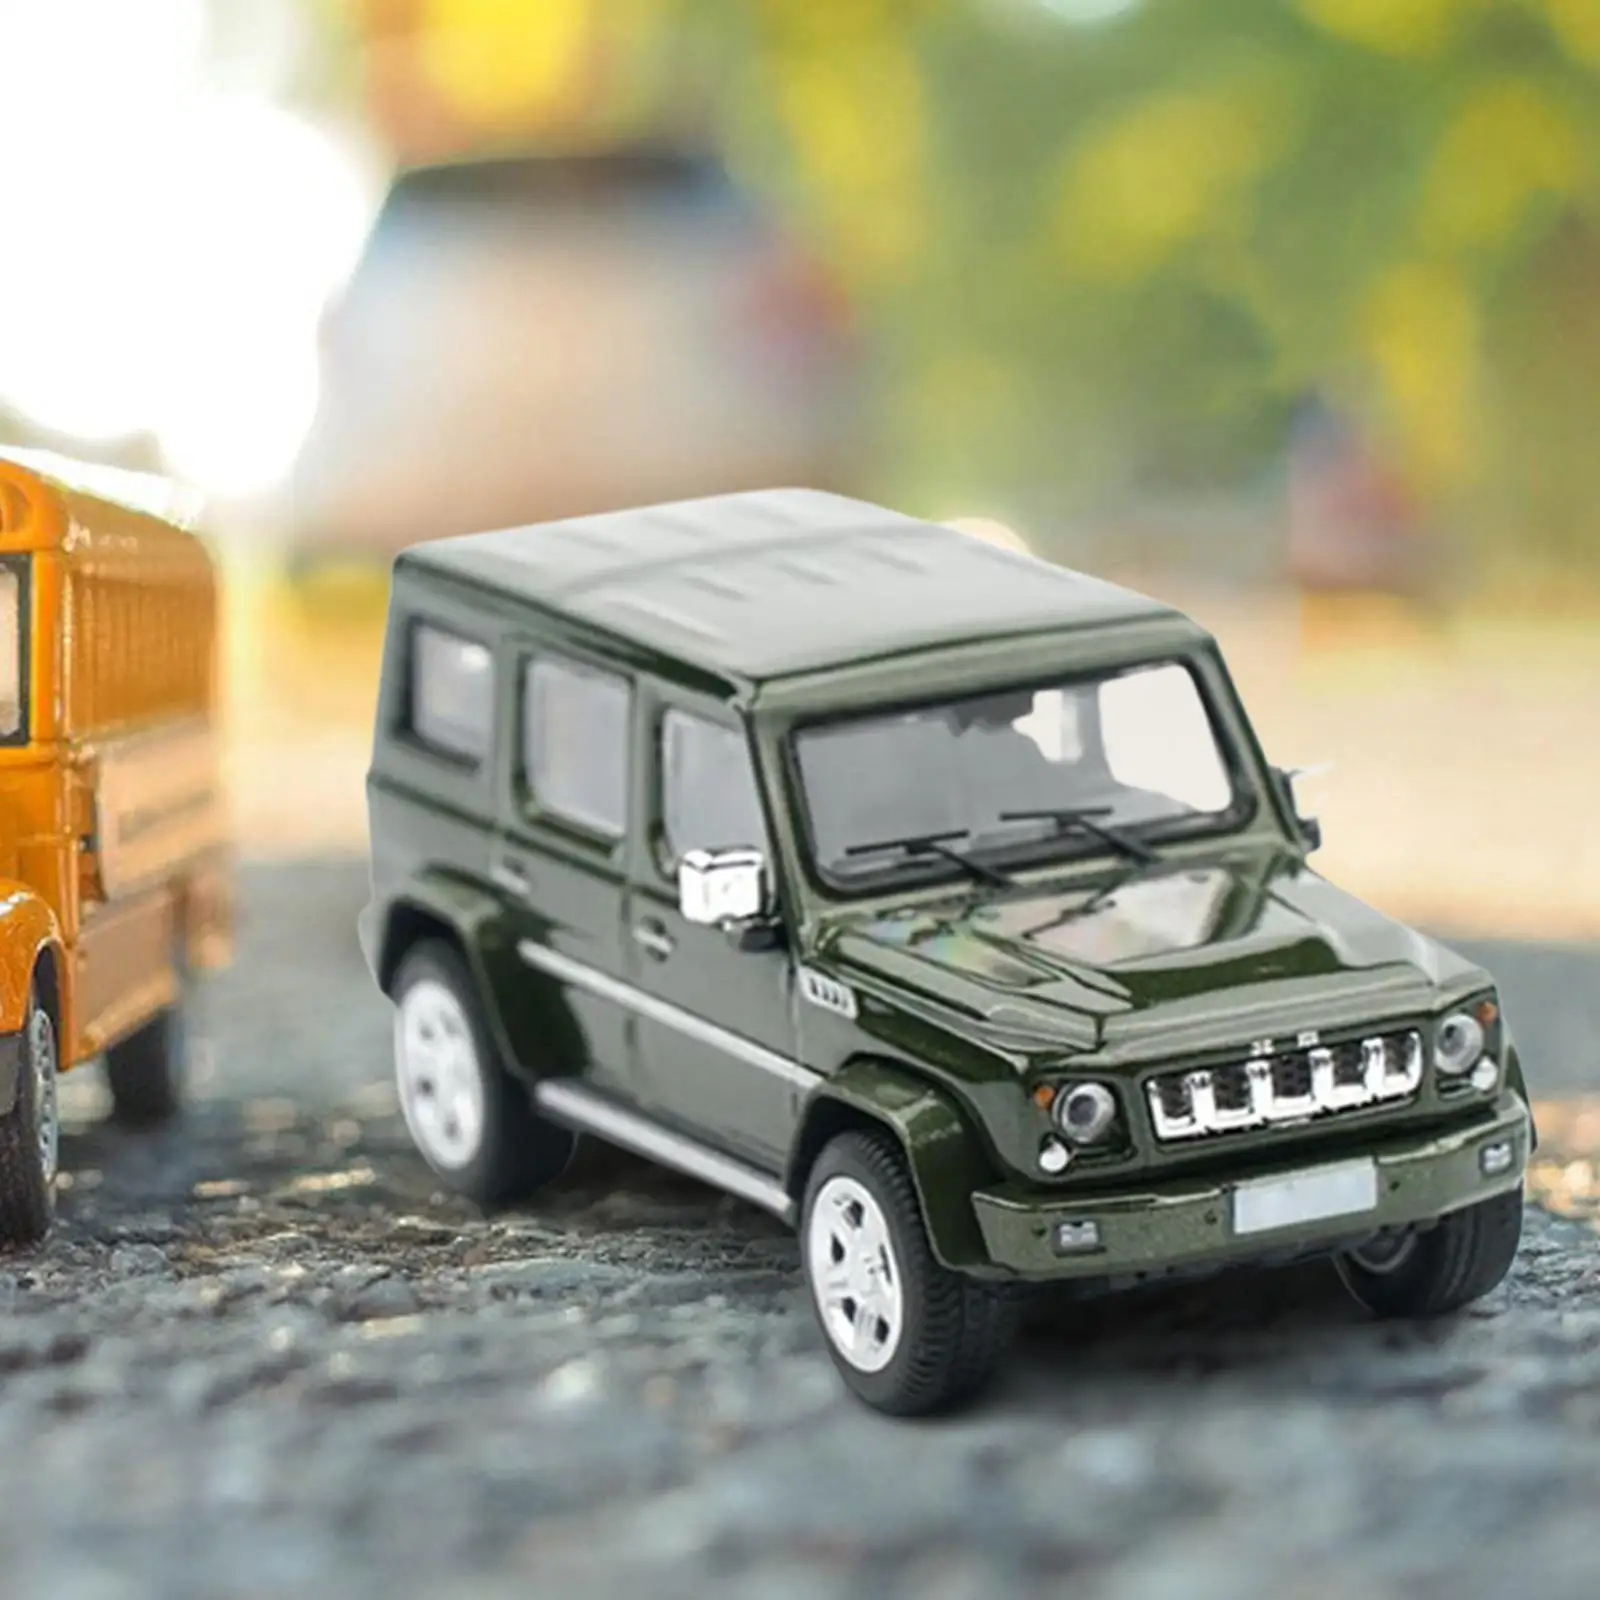 1/64 Car Model Mini Vehicles Toys for Diorama Miniature Scene Accessories